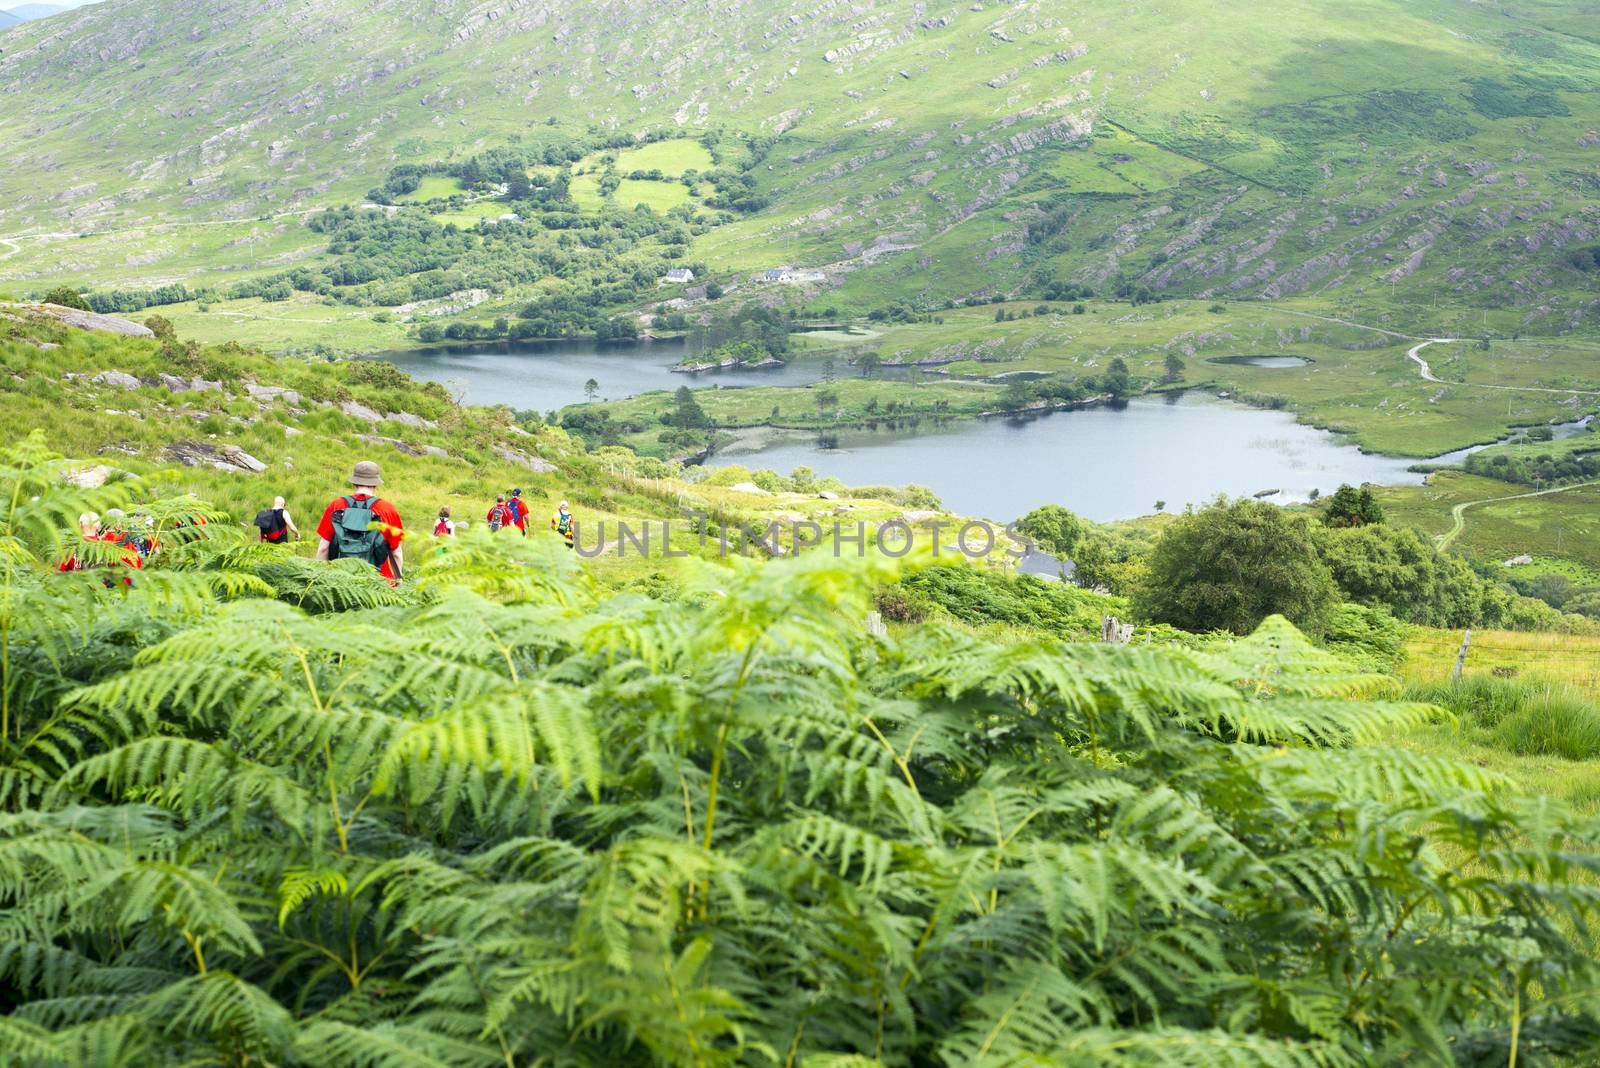 wild ferns with hikers on the kerry way in irelands wild atlantic way